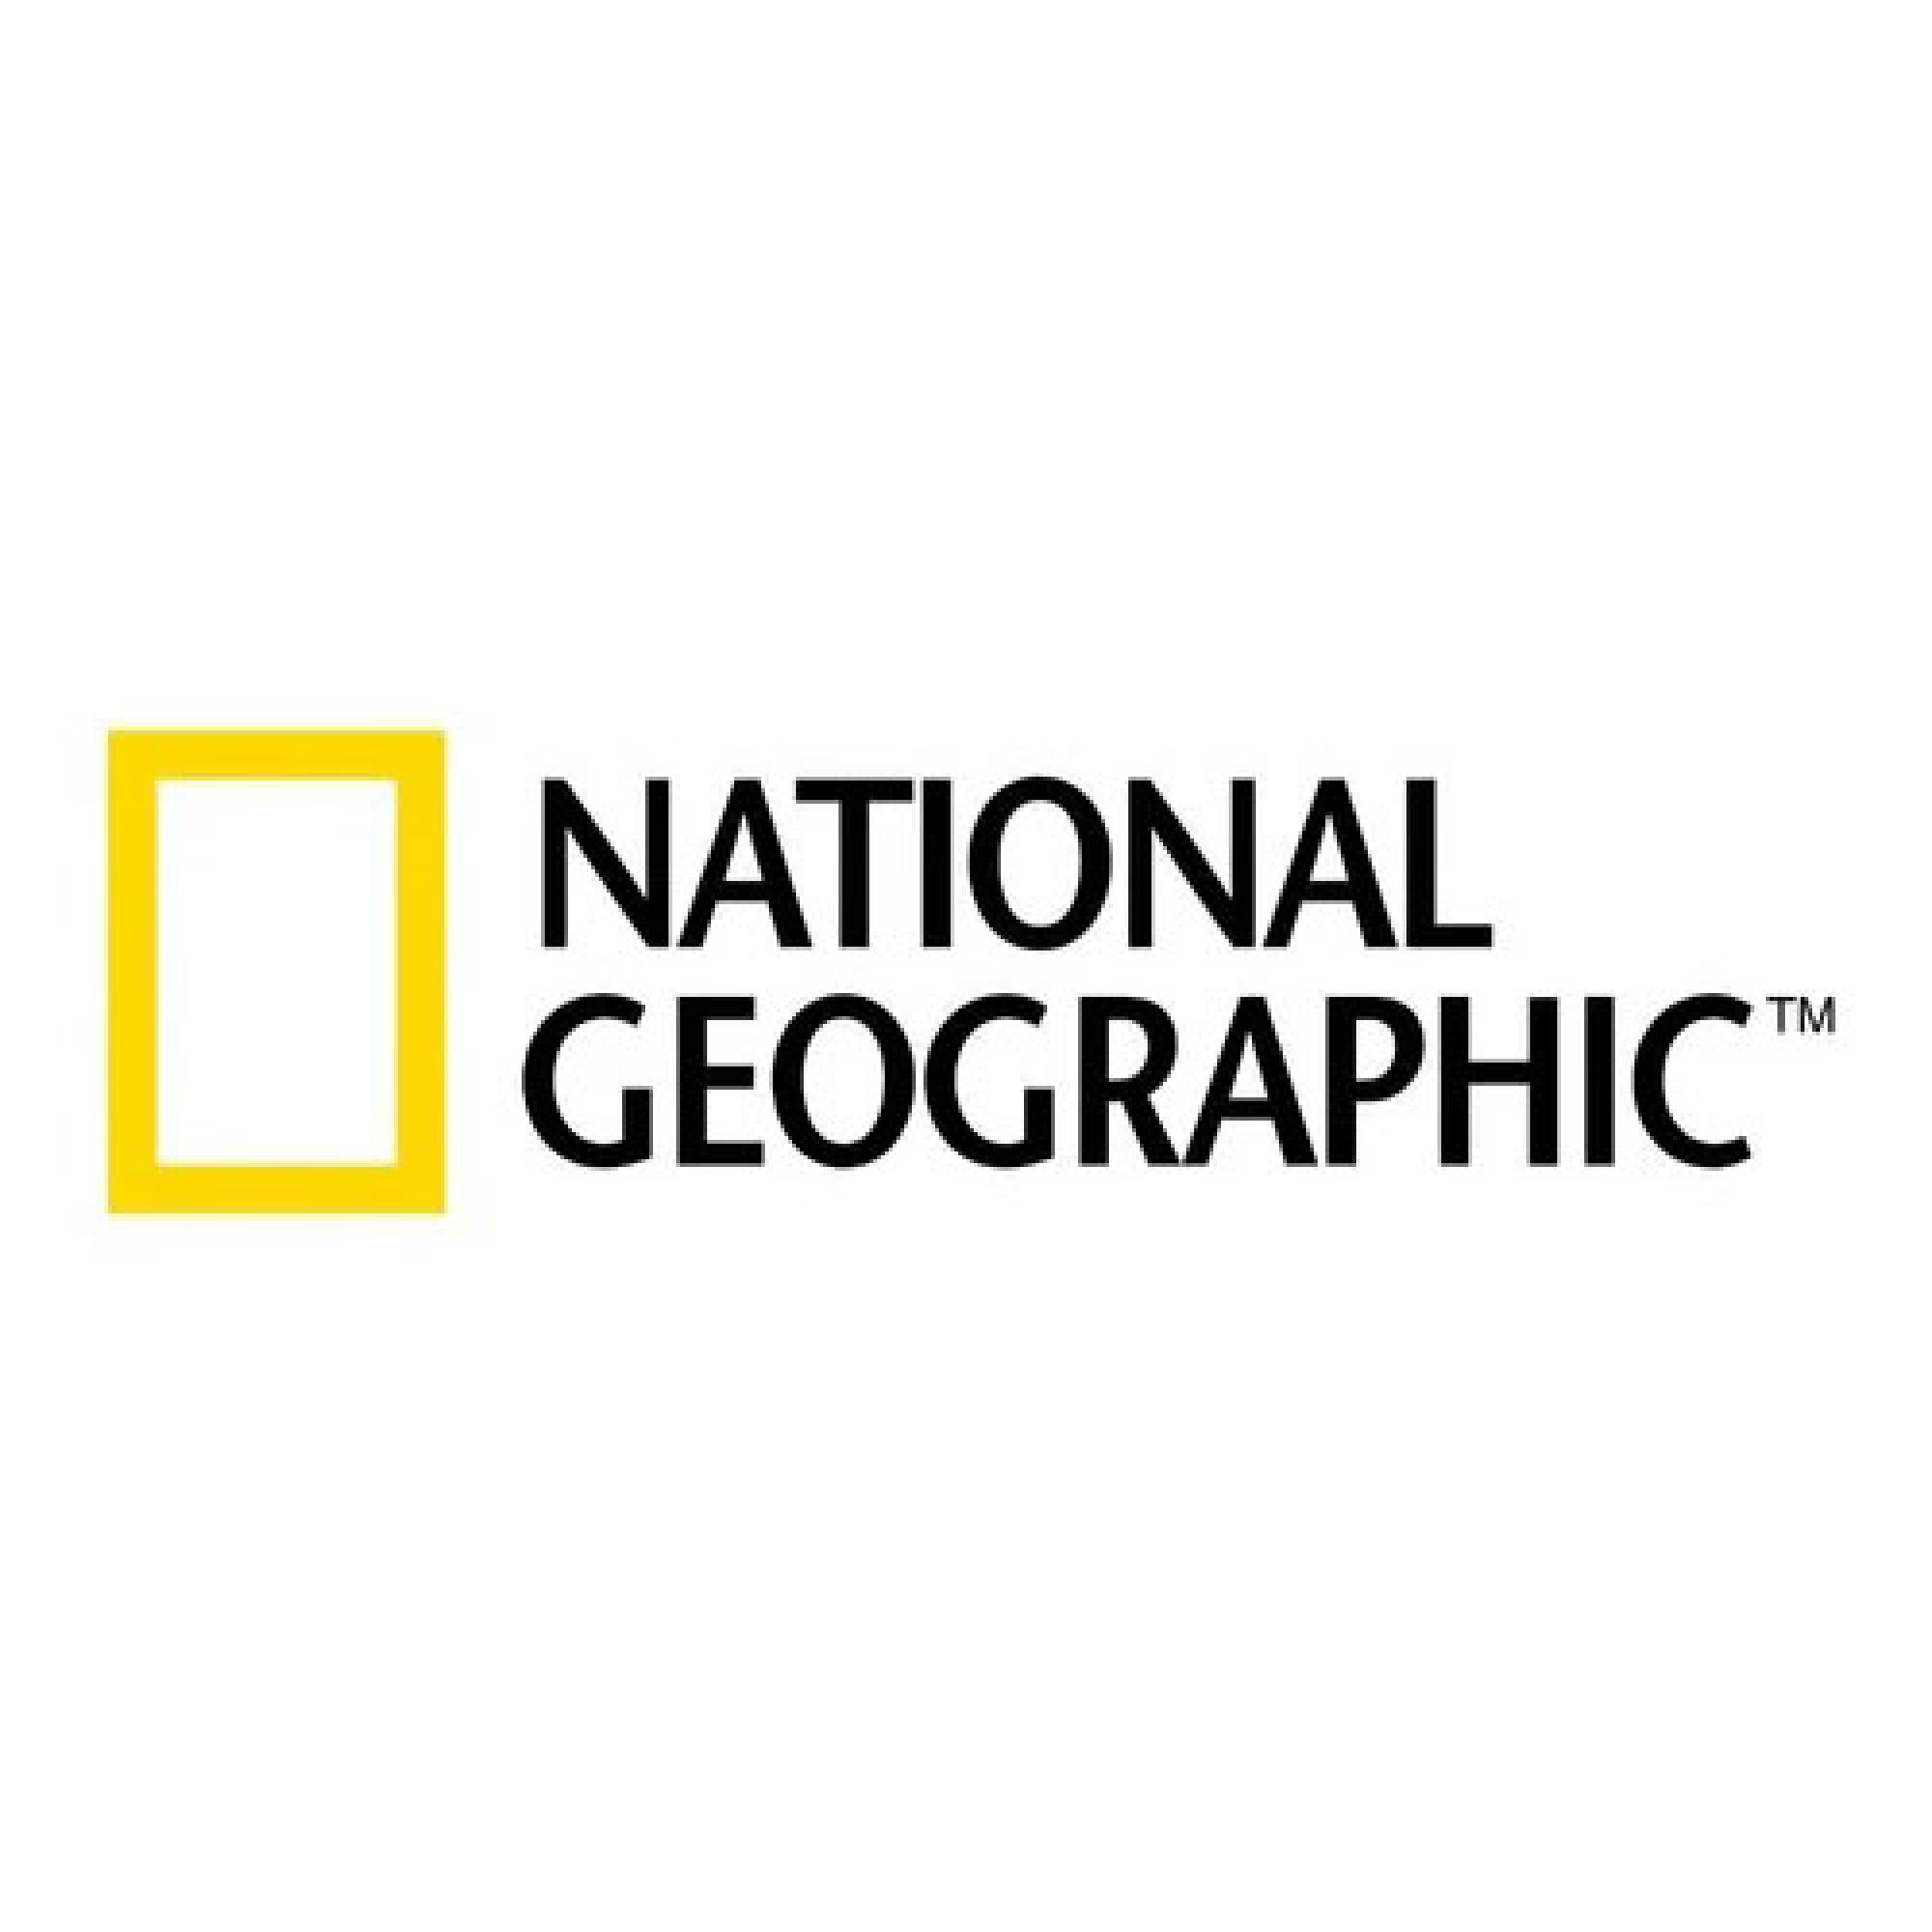 Mochila National Geographic Lake 65 Litros